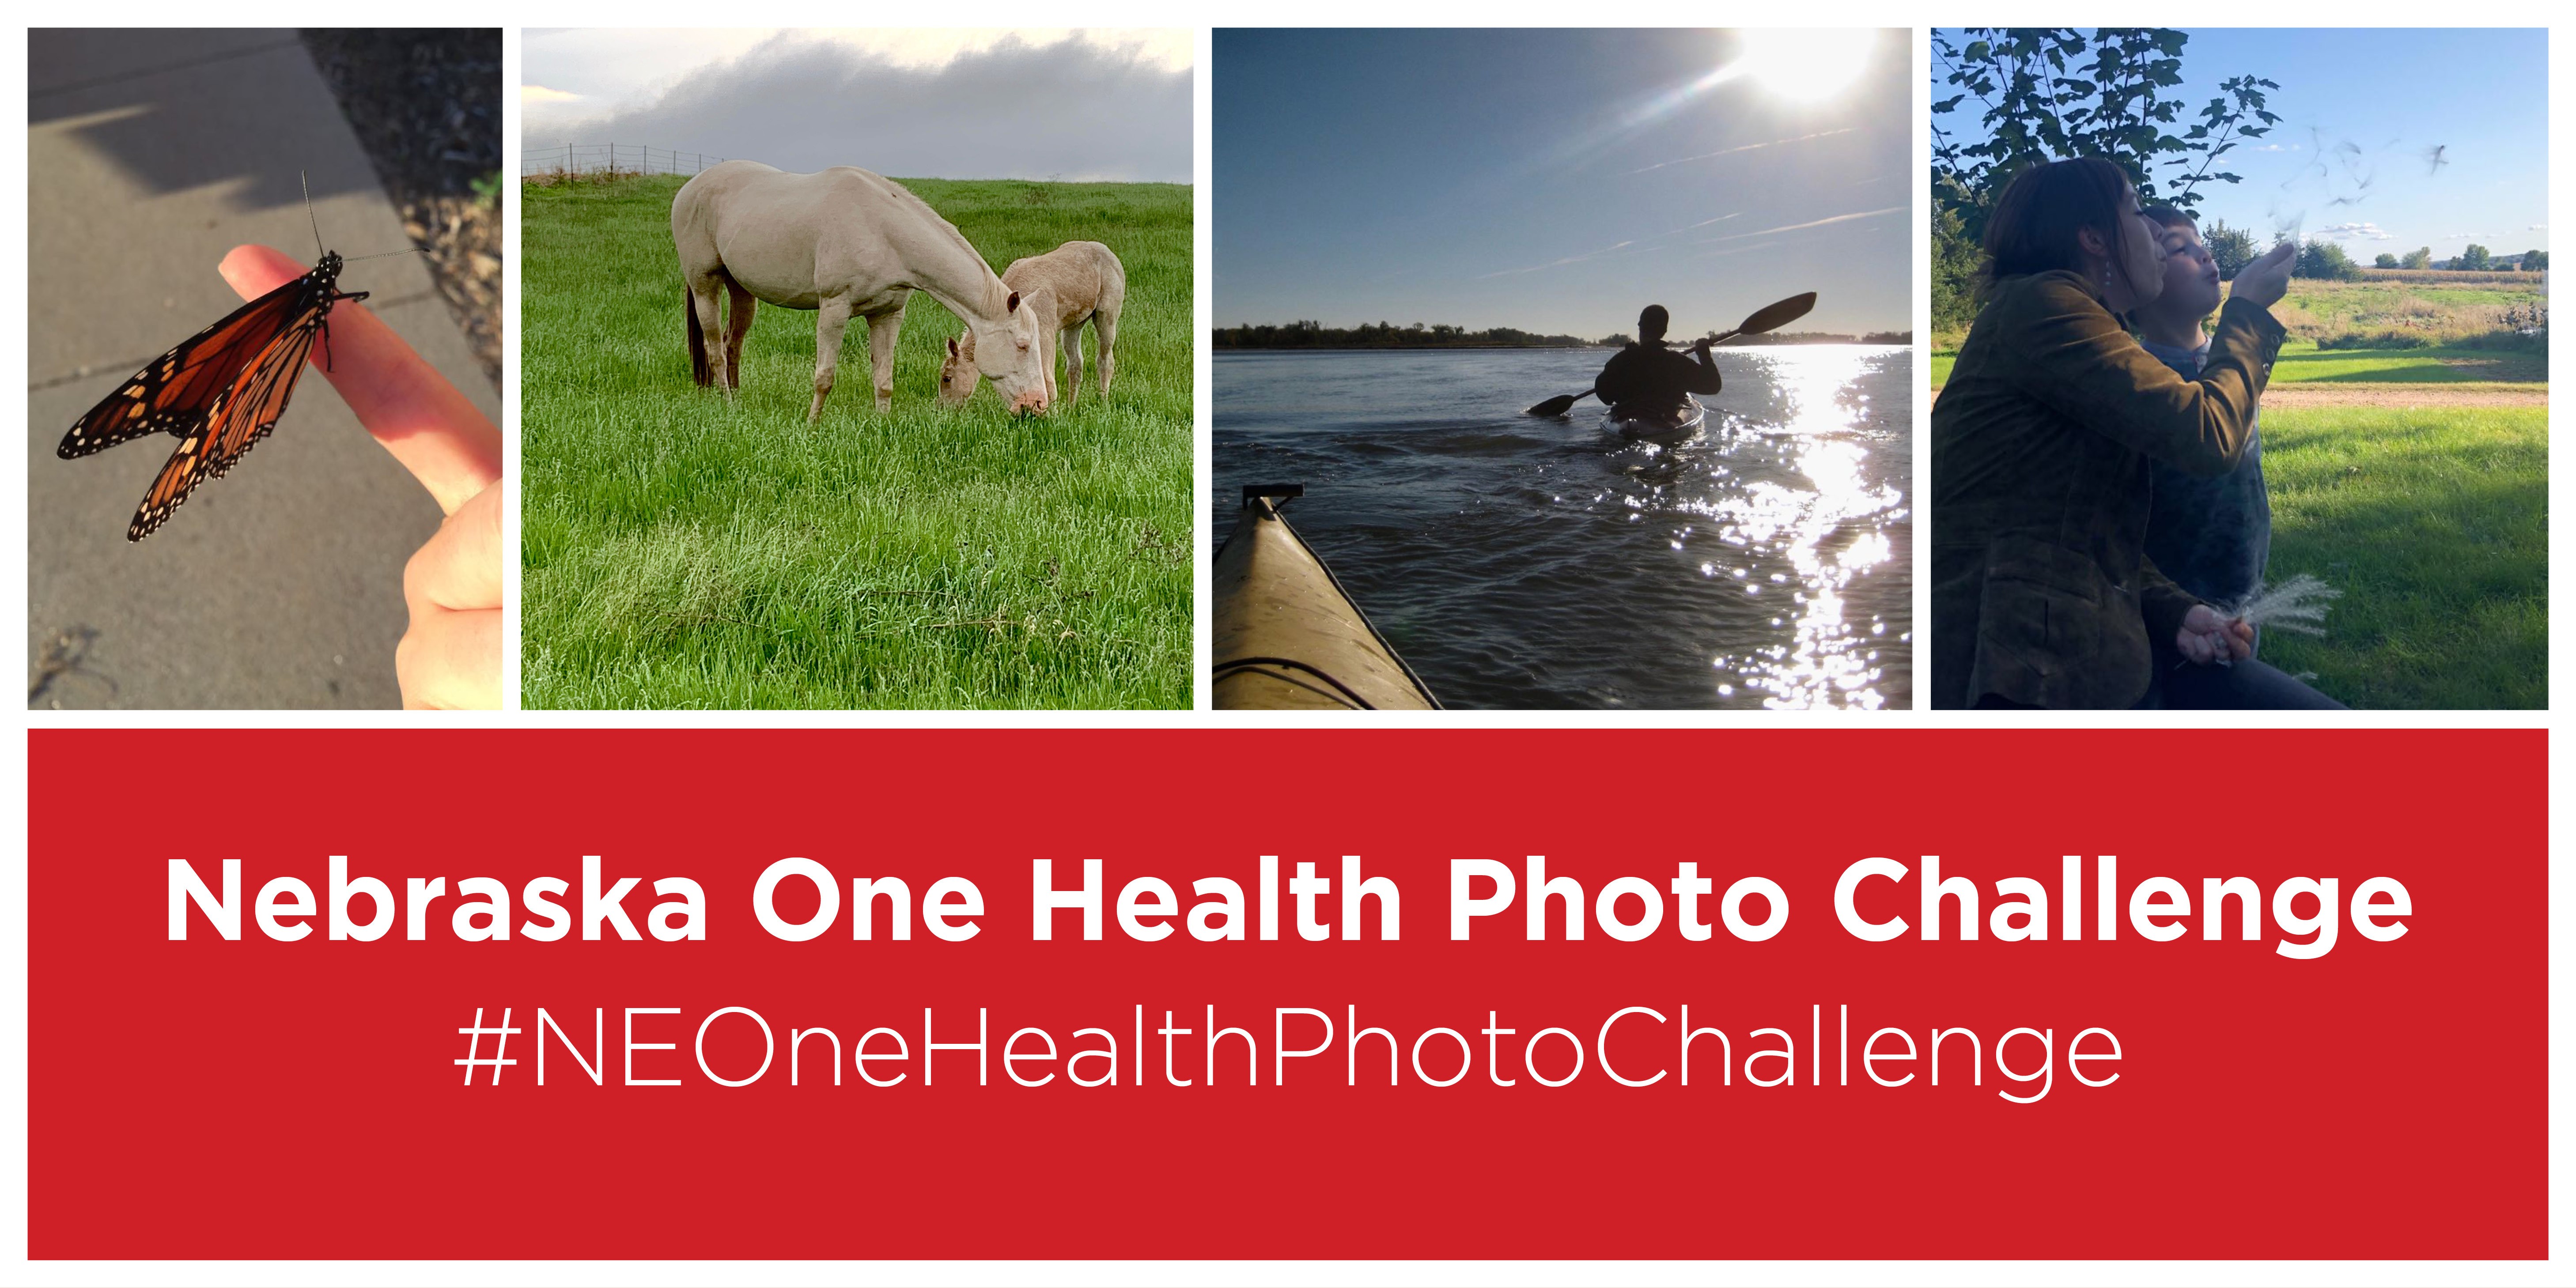 Nebraska One Health photo challenge